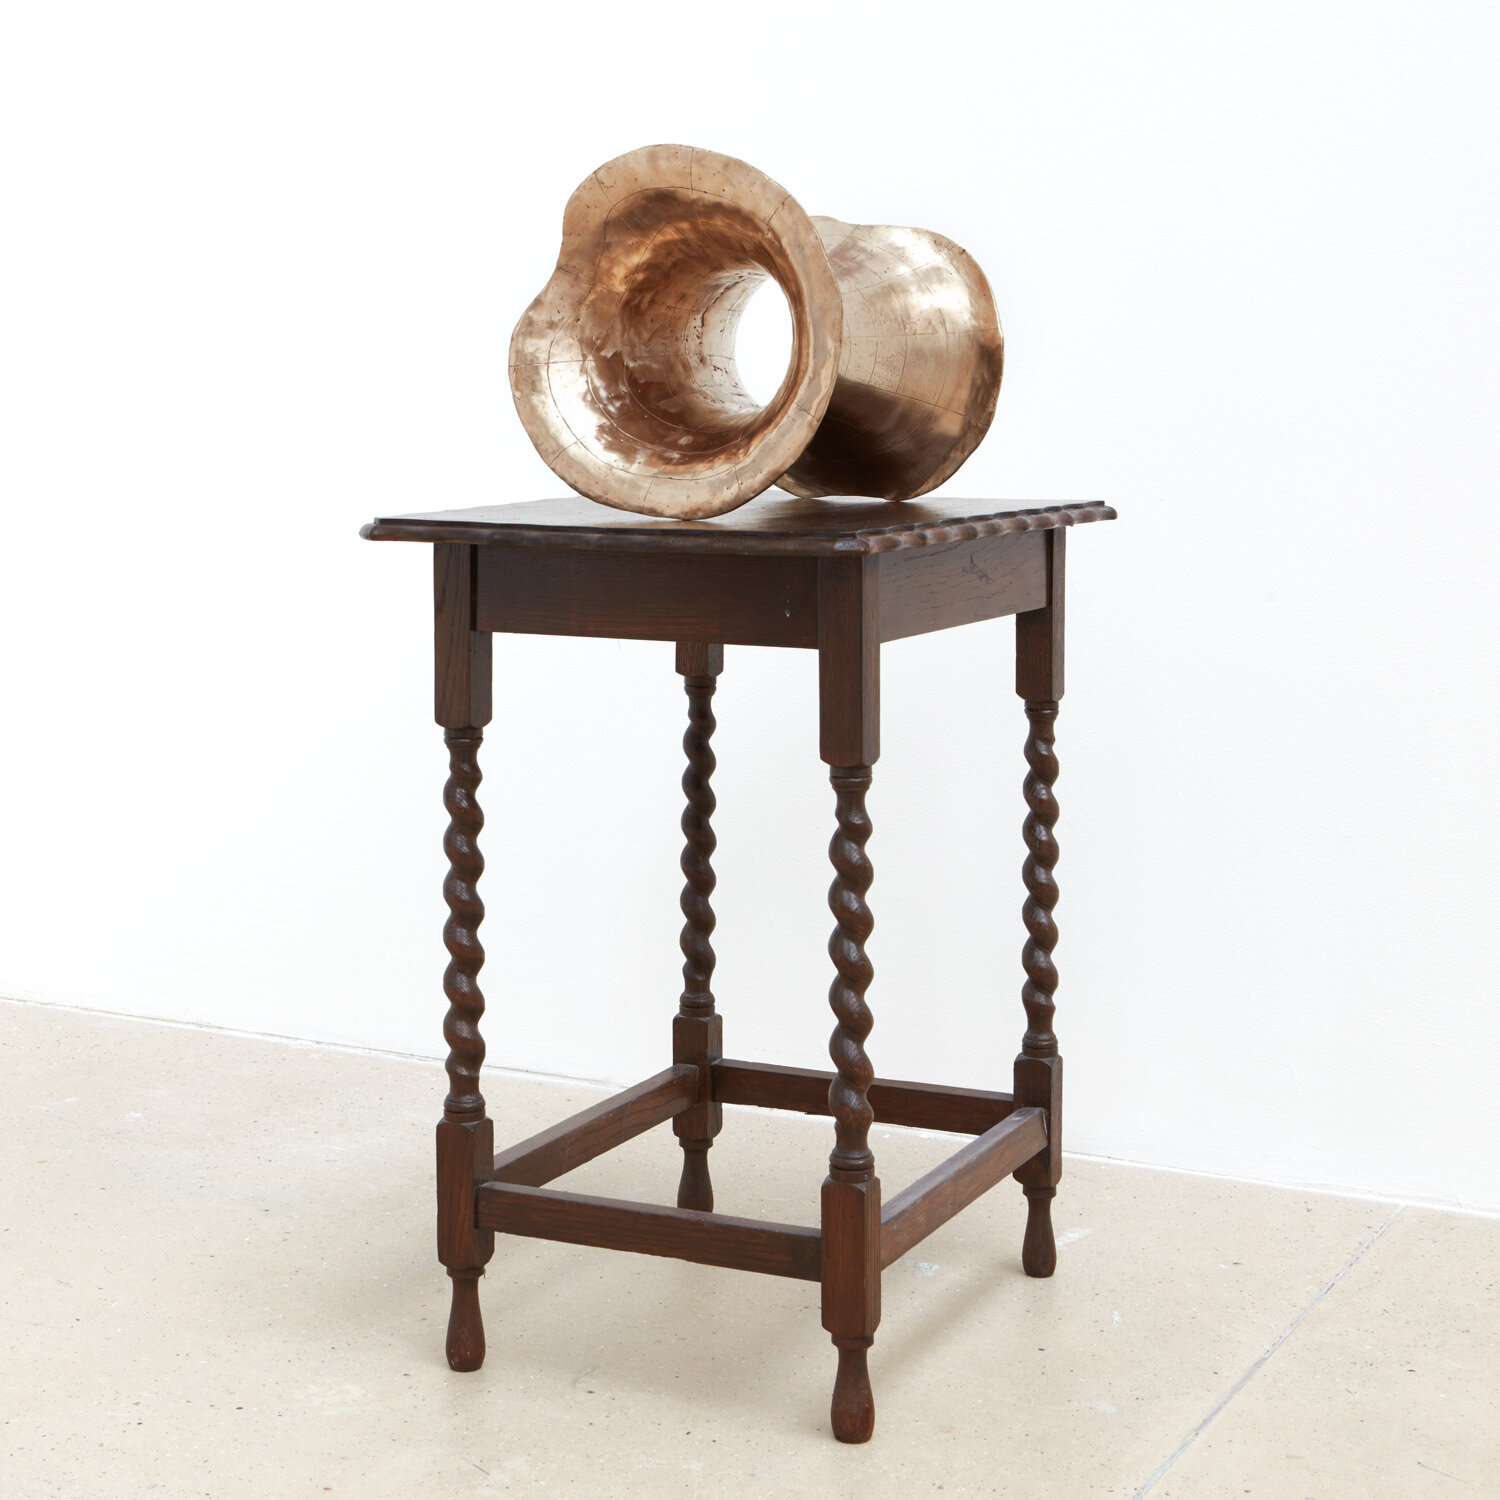   Wormhole Bell , 2018  cast bronze  30 x 36 x 30 cm 